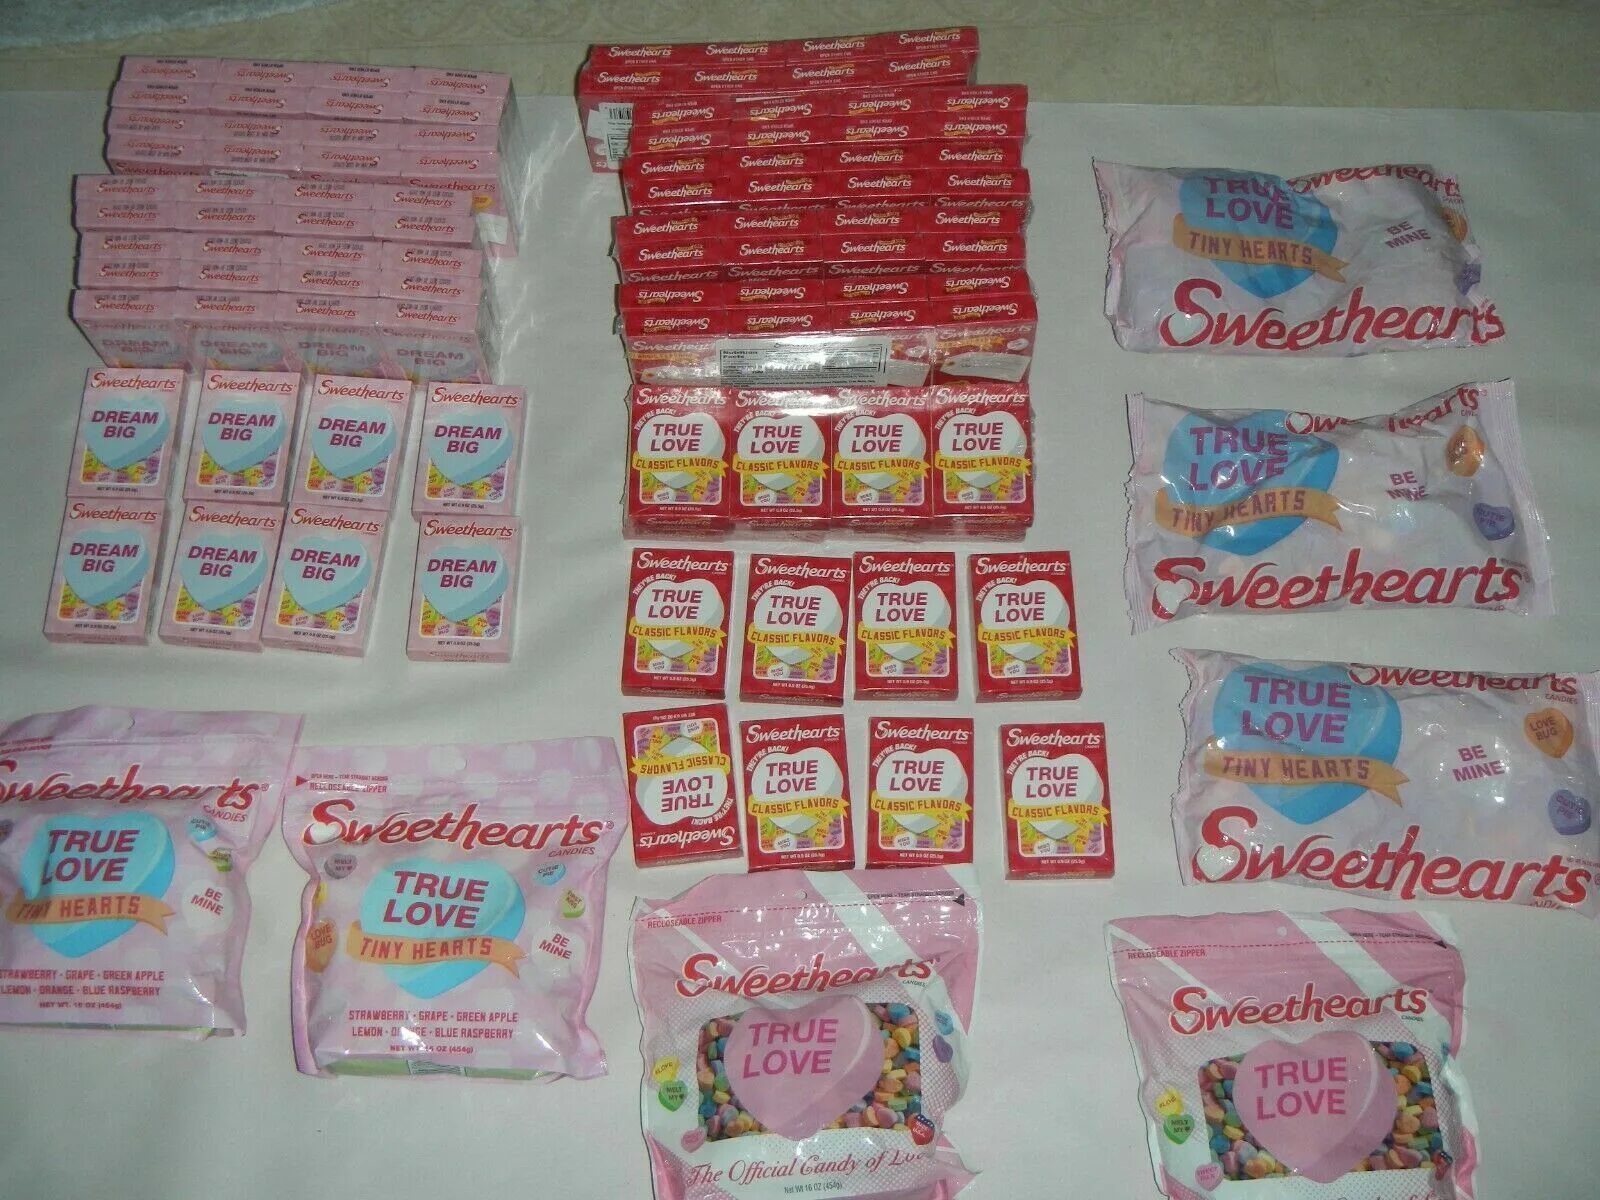 Sweethearts конфеты. Конфеты Necco. Sweethearts конфеты Original. Sweethearts леденцы. Песни из конфетки оригинал